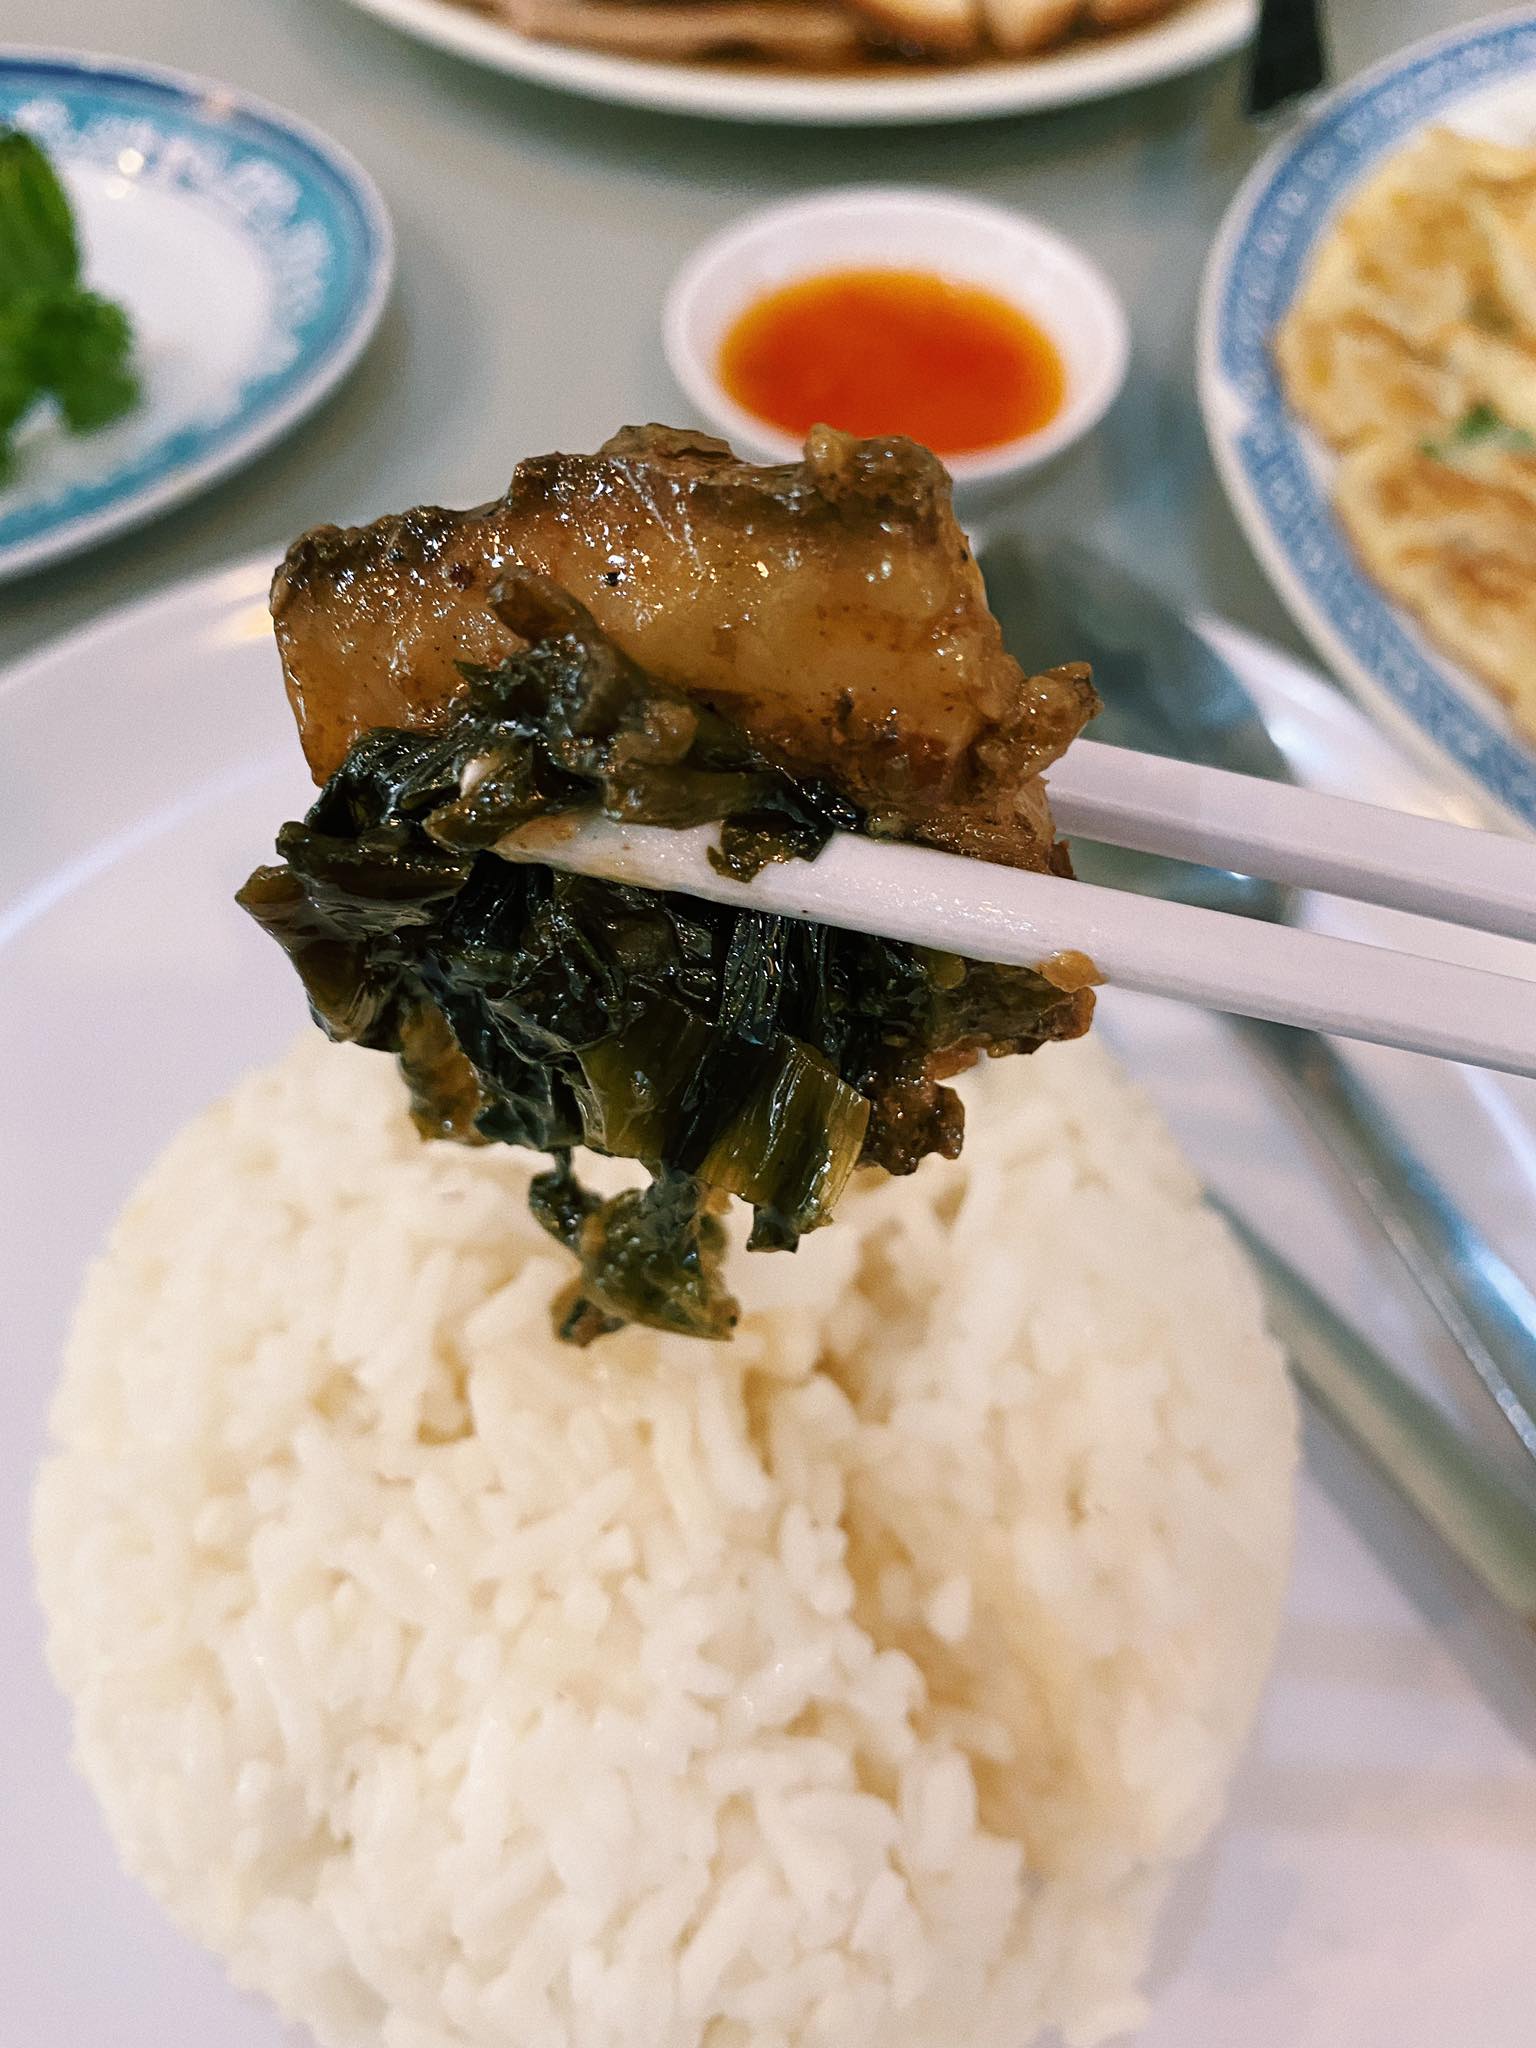 Stewed pork belly with mui choy teochew laoer